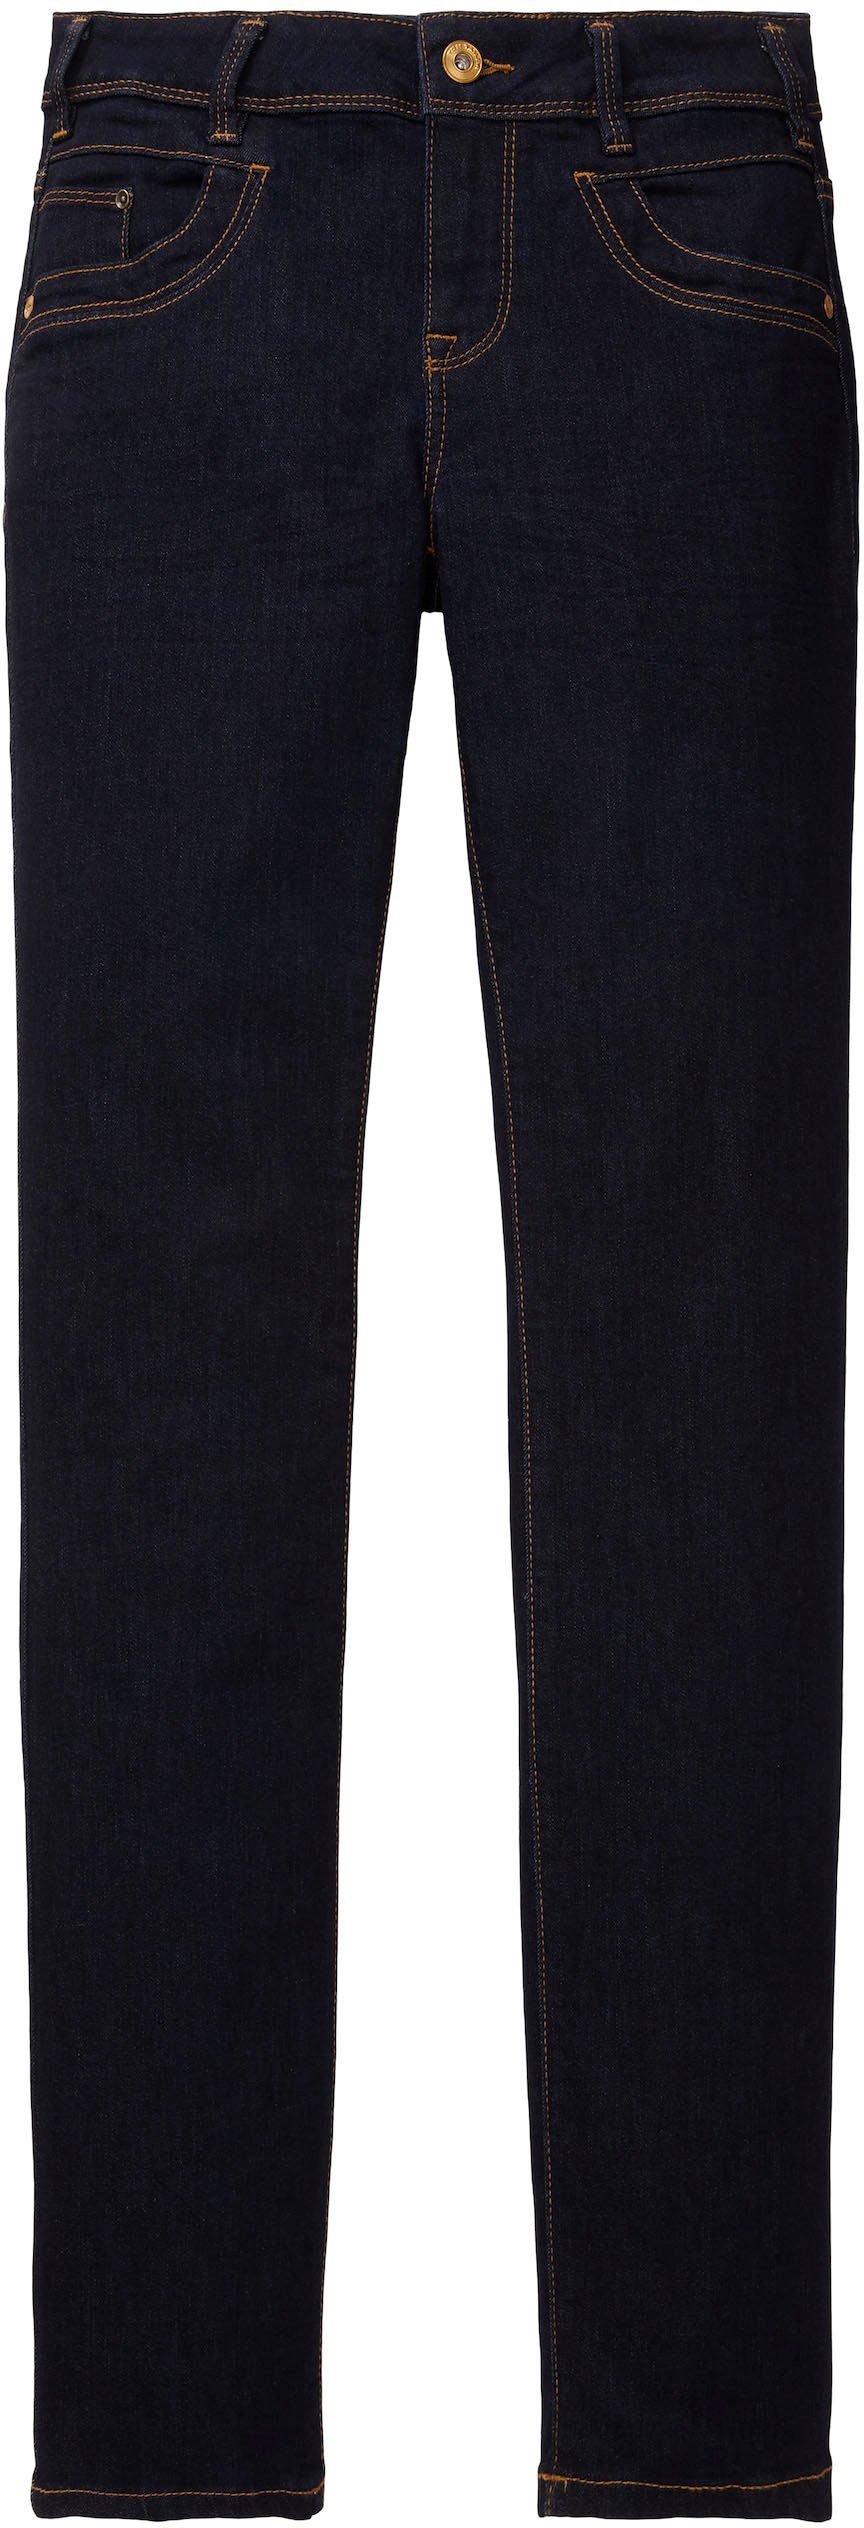 TOM TAILOR Gerade Jeans denim Kontrastnähten blue rinsed mit